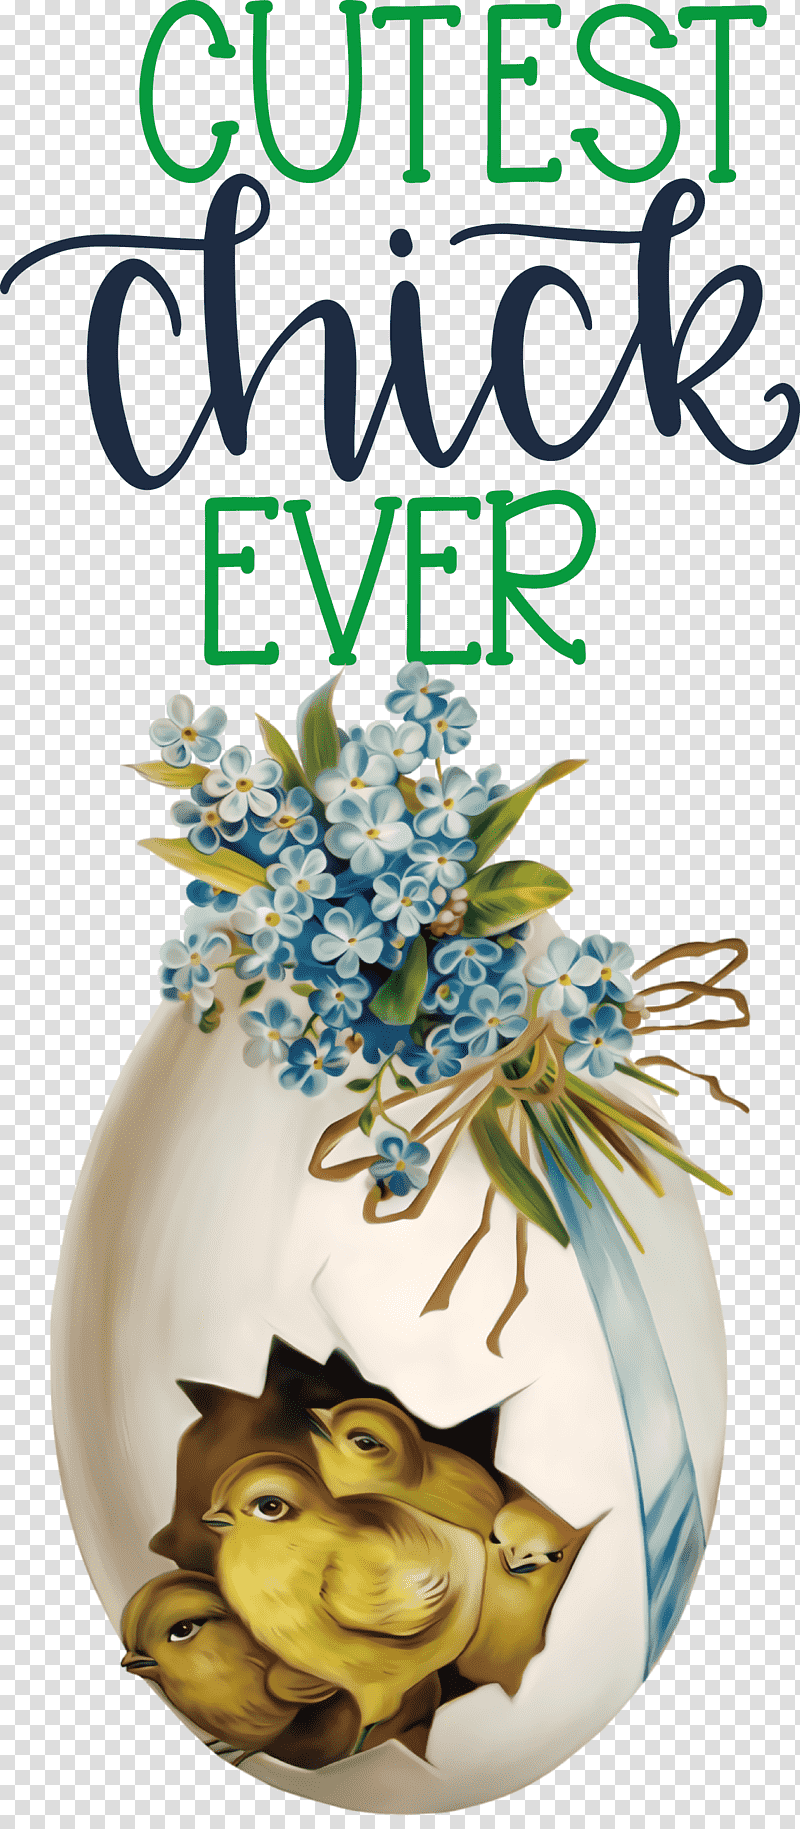 Happy Easter Cutest Chick Ever, Chicken, Easter Egg, Egg White, Yolk, Eggshell, Cake transparent background PNG clipart